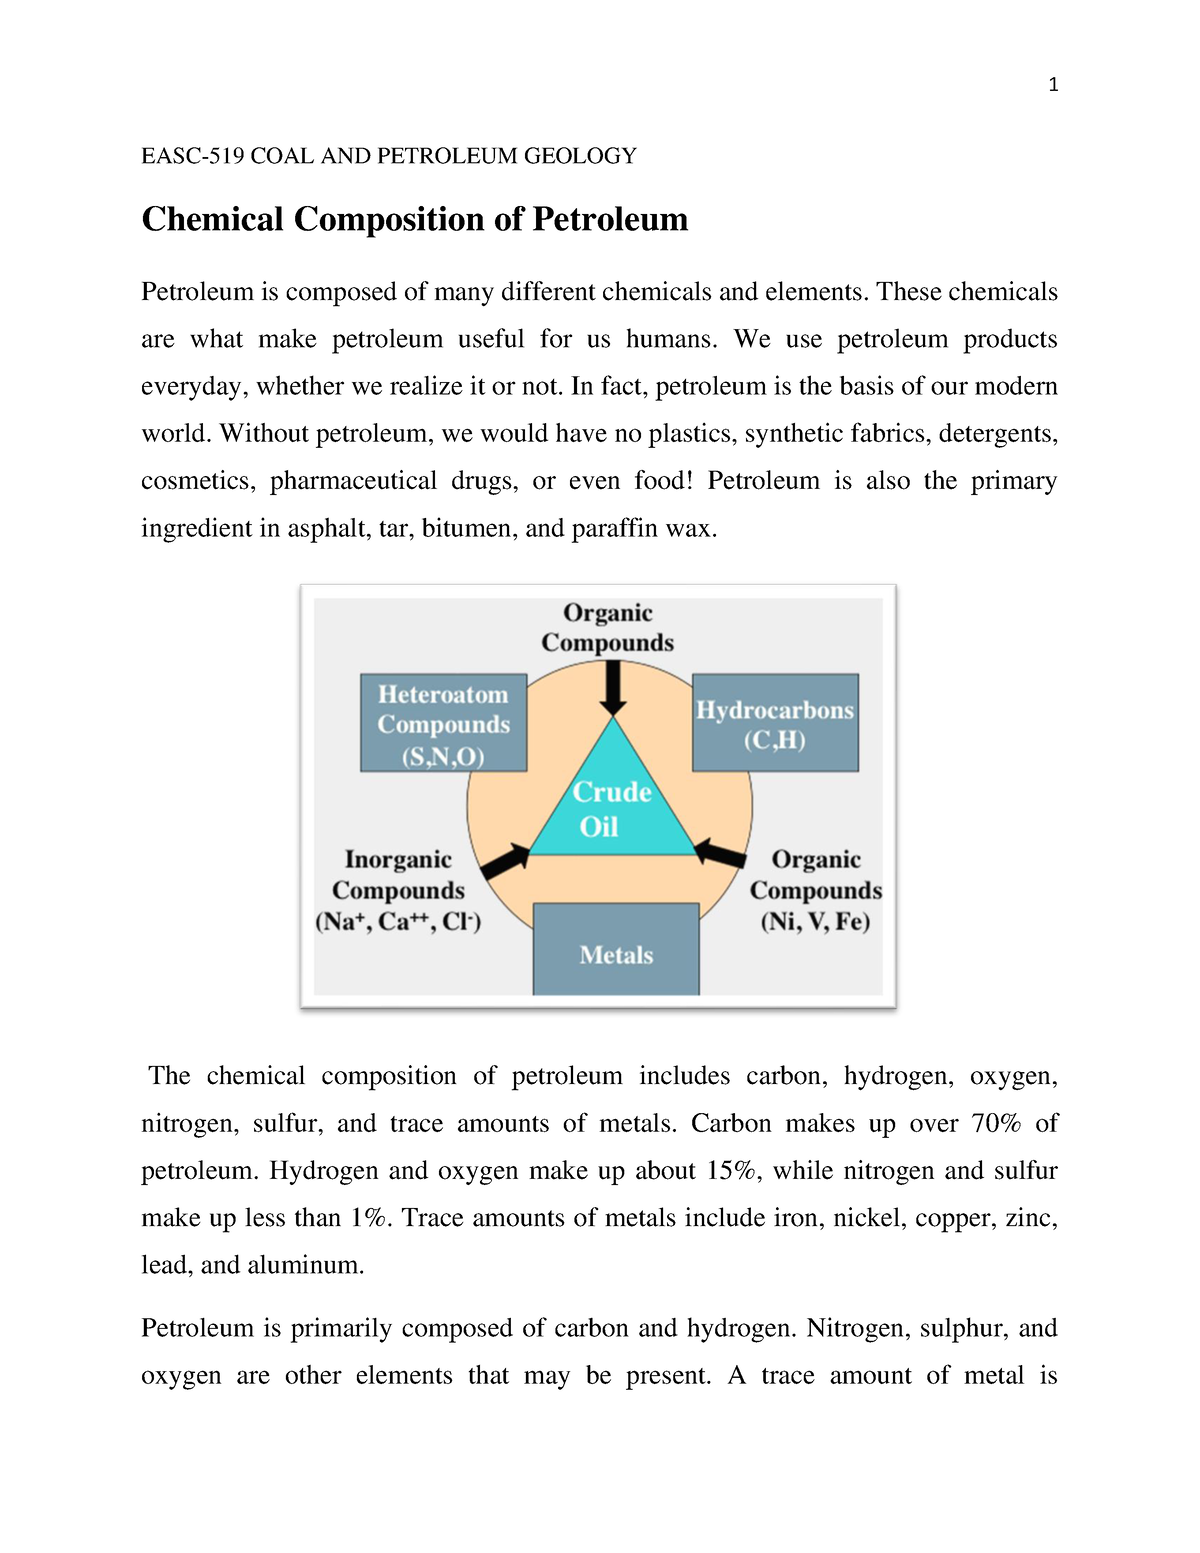 Chemical composition of petroleum - EASC-519 COAL AND PETROLEUM